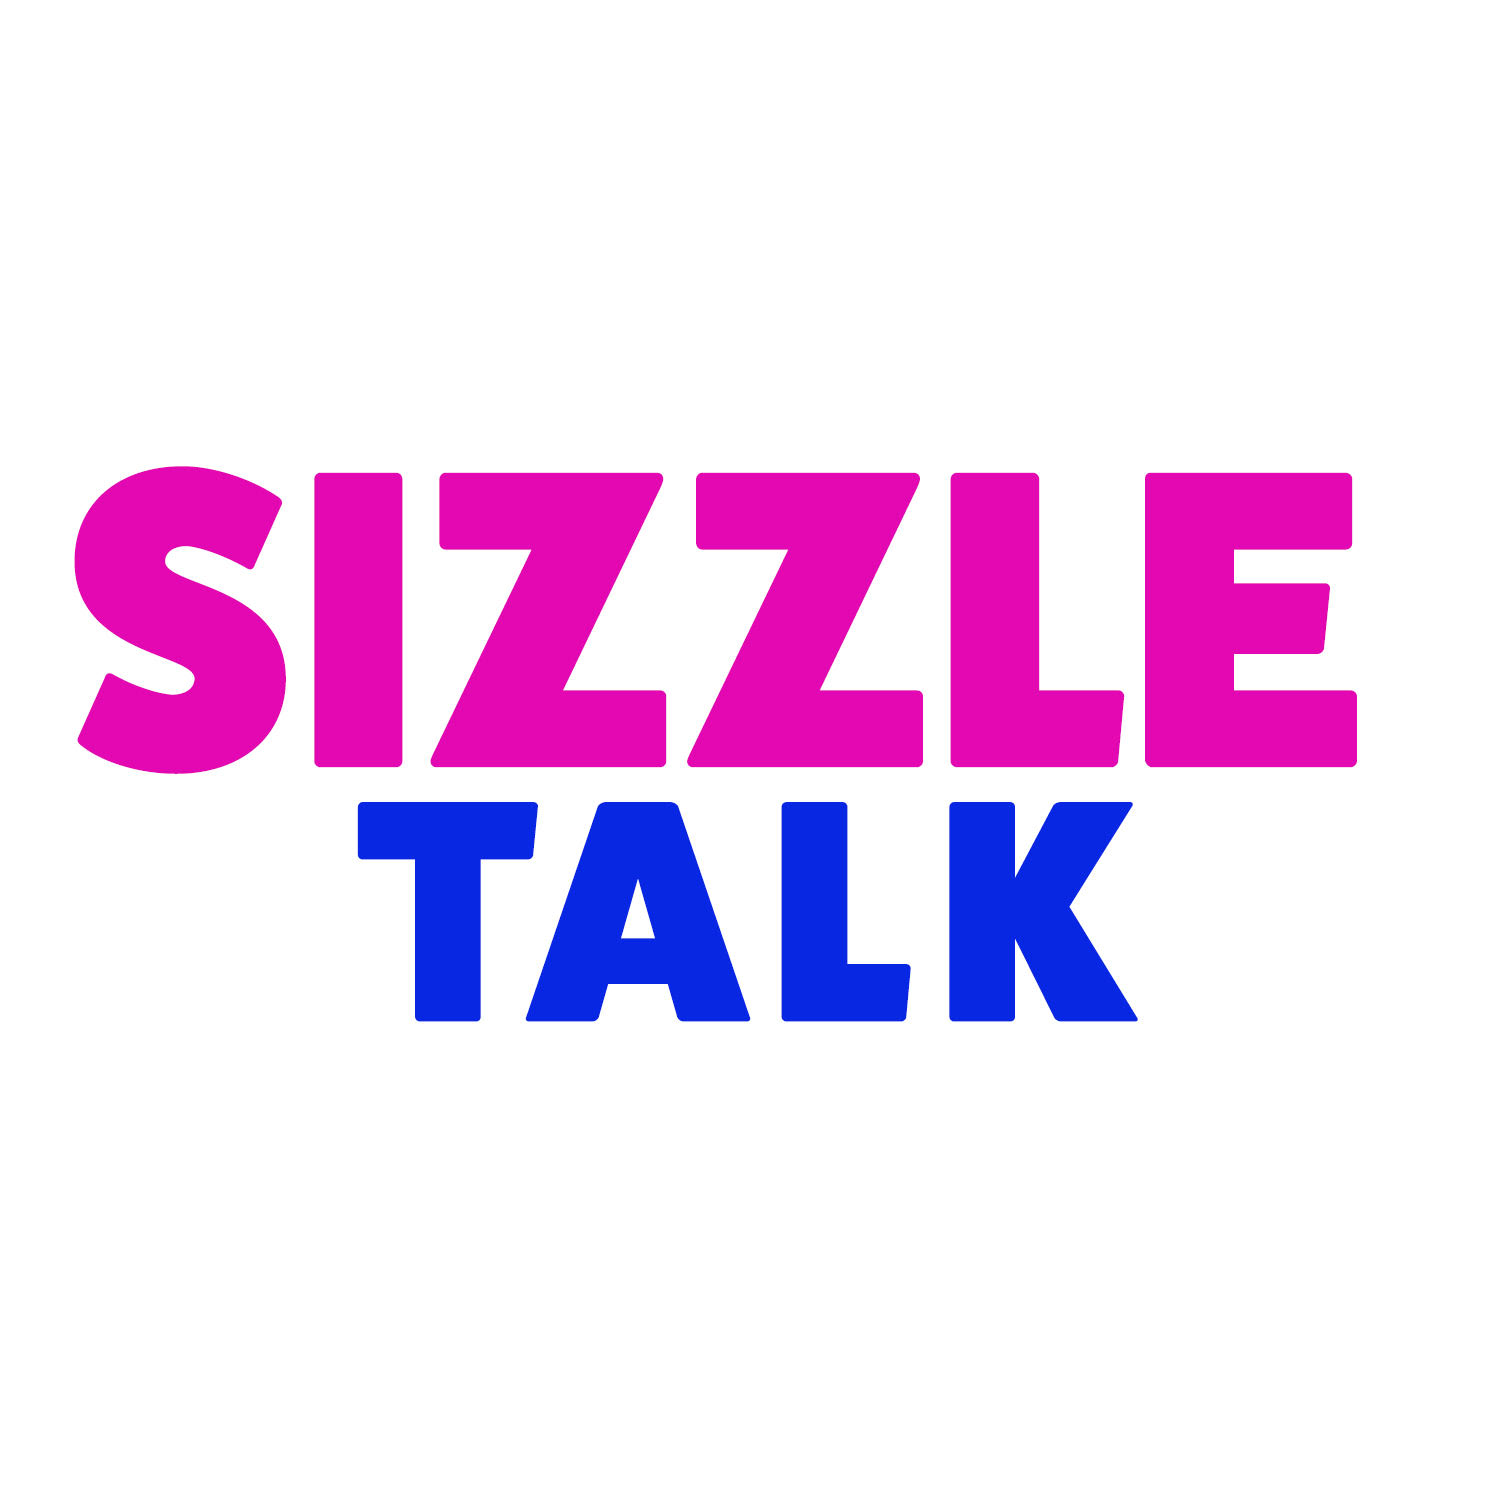 Fashion Sizzle To Launch Sizzletalk  Podcast